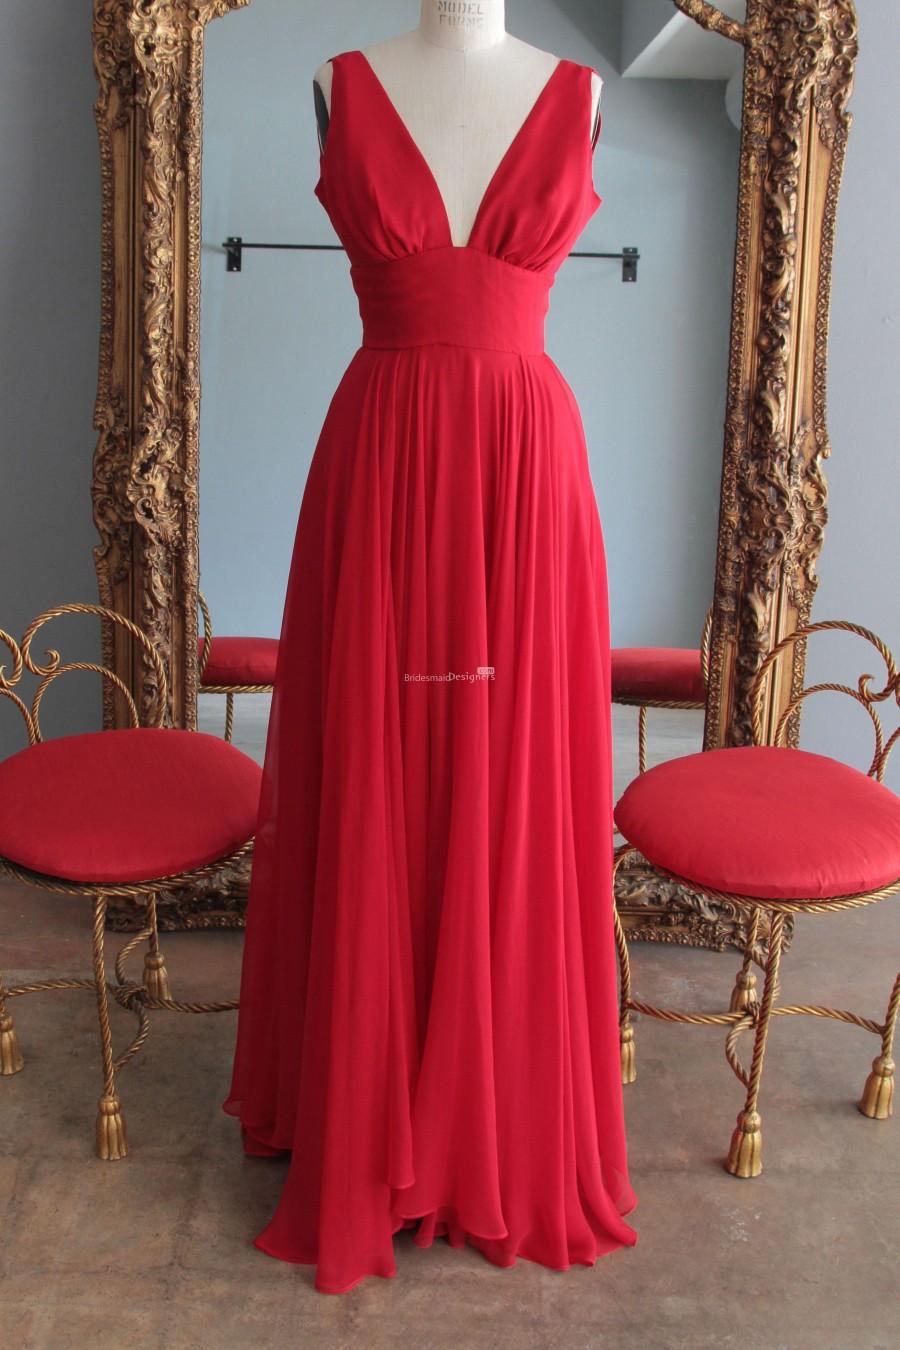 Wedding - Red Dress for Bridesmaid - BridesmaidDesigners